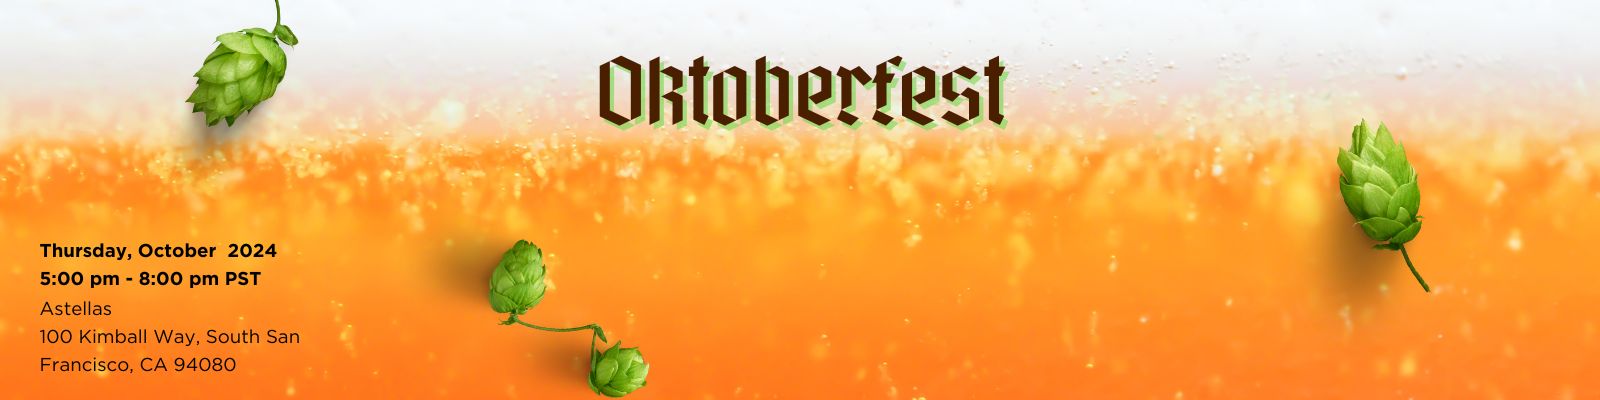 Commuter Conference - Oktoberfest